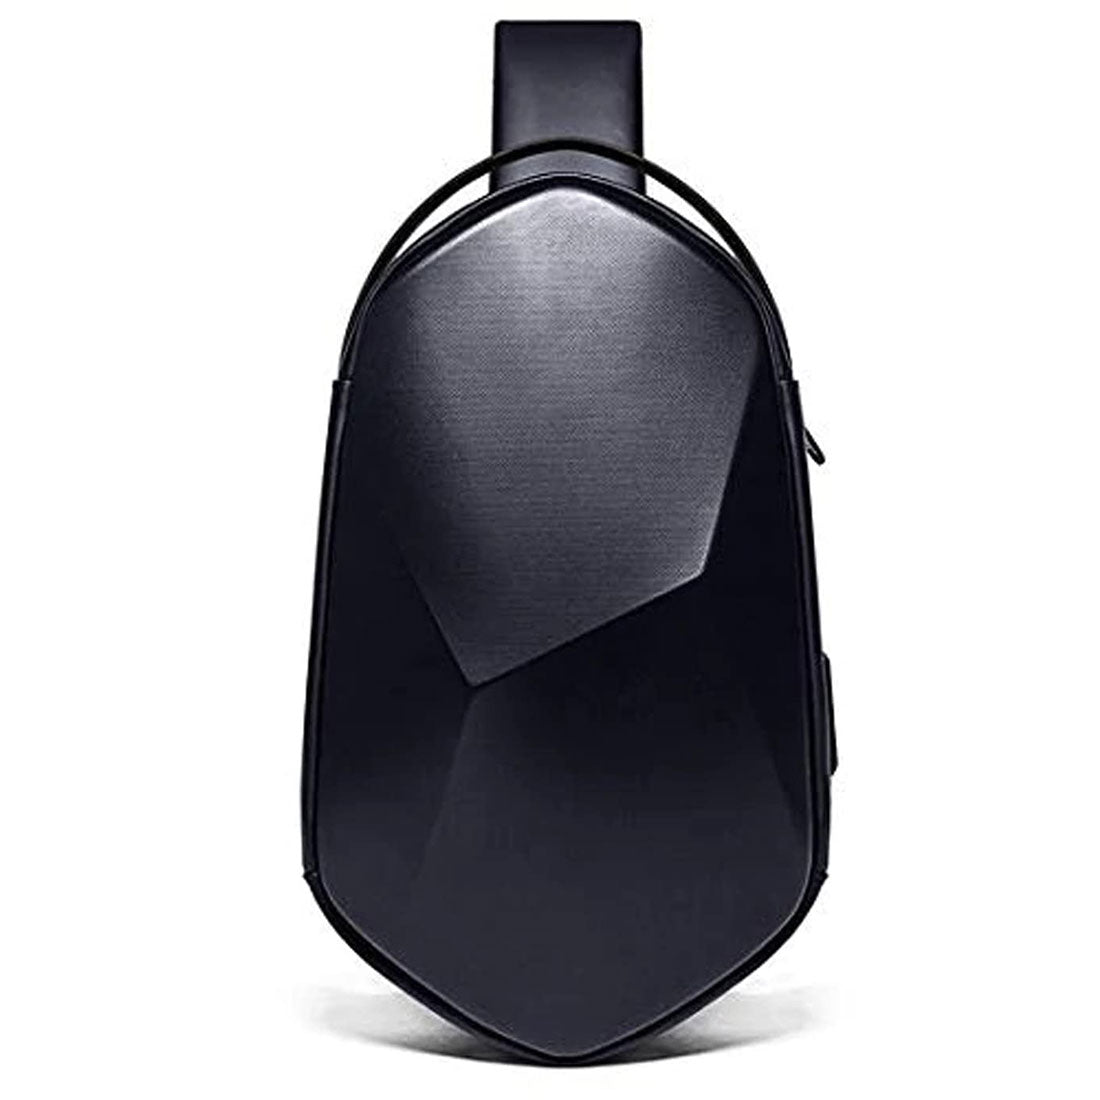 Red Lemon Unisex-adult Bange Series Rhombus Shell Design Waterproof Sling Bag with USB Charging